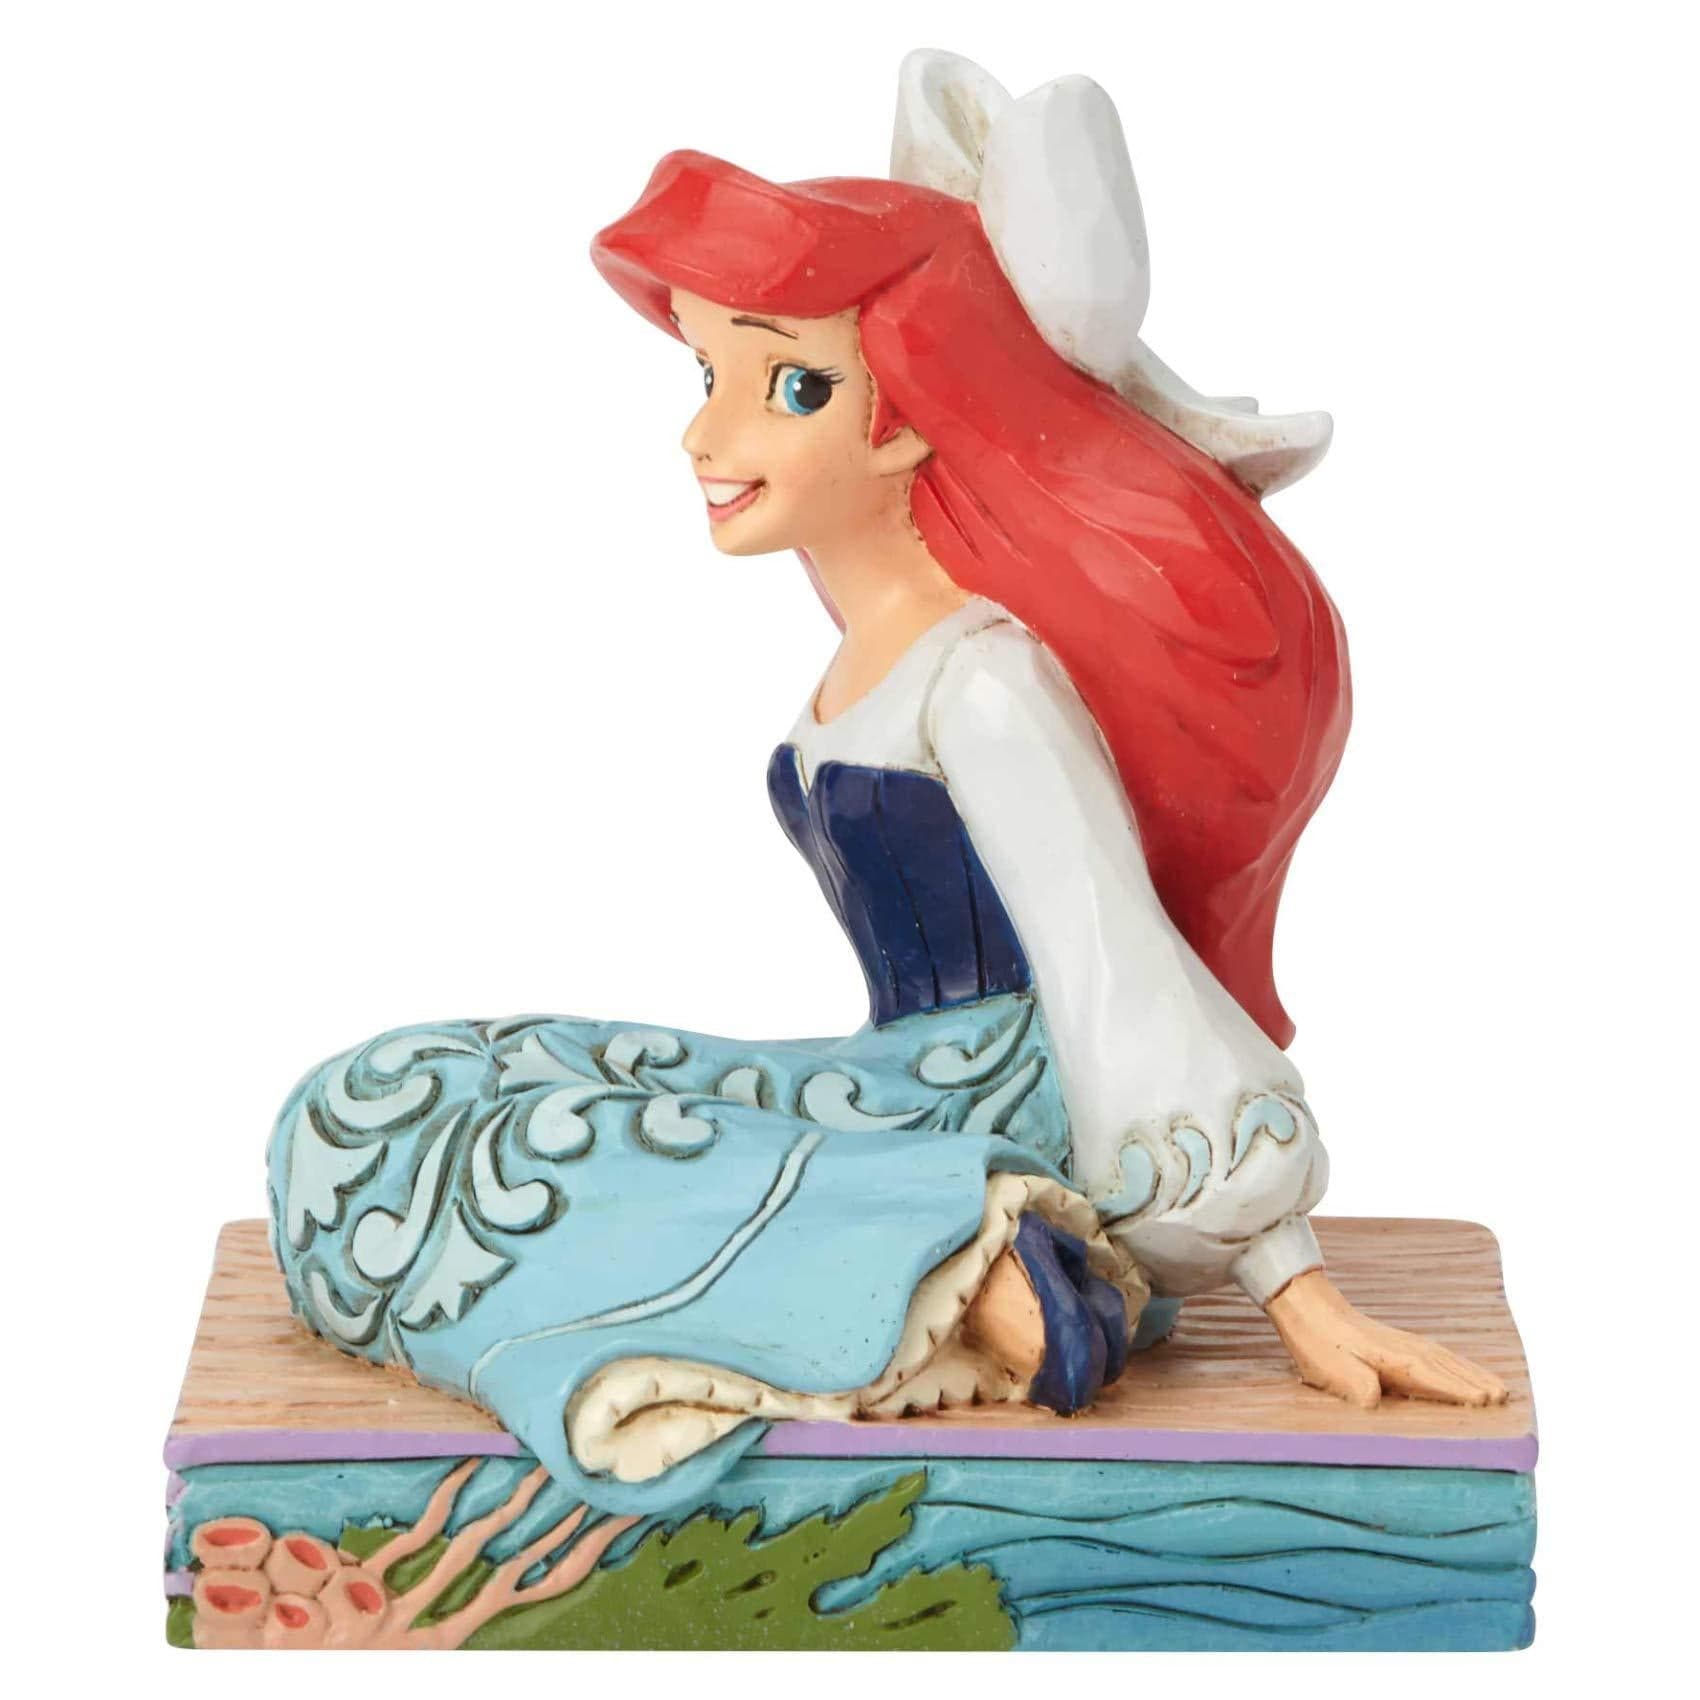 Enesco Disney Ornament Disney Traditions Figurine -Be Bold (Ariel Figurine)